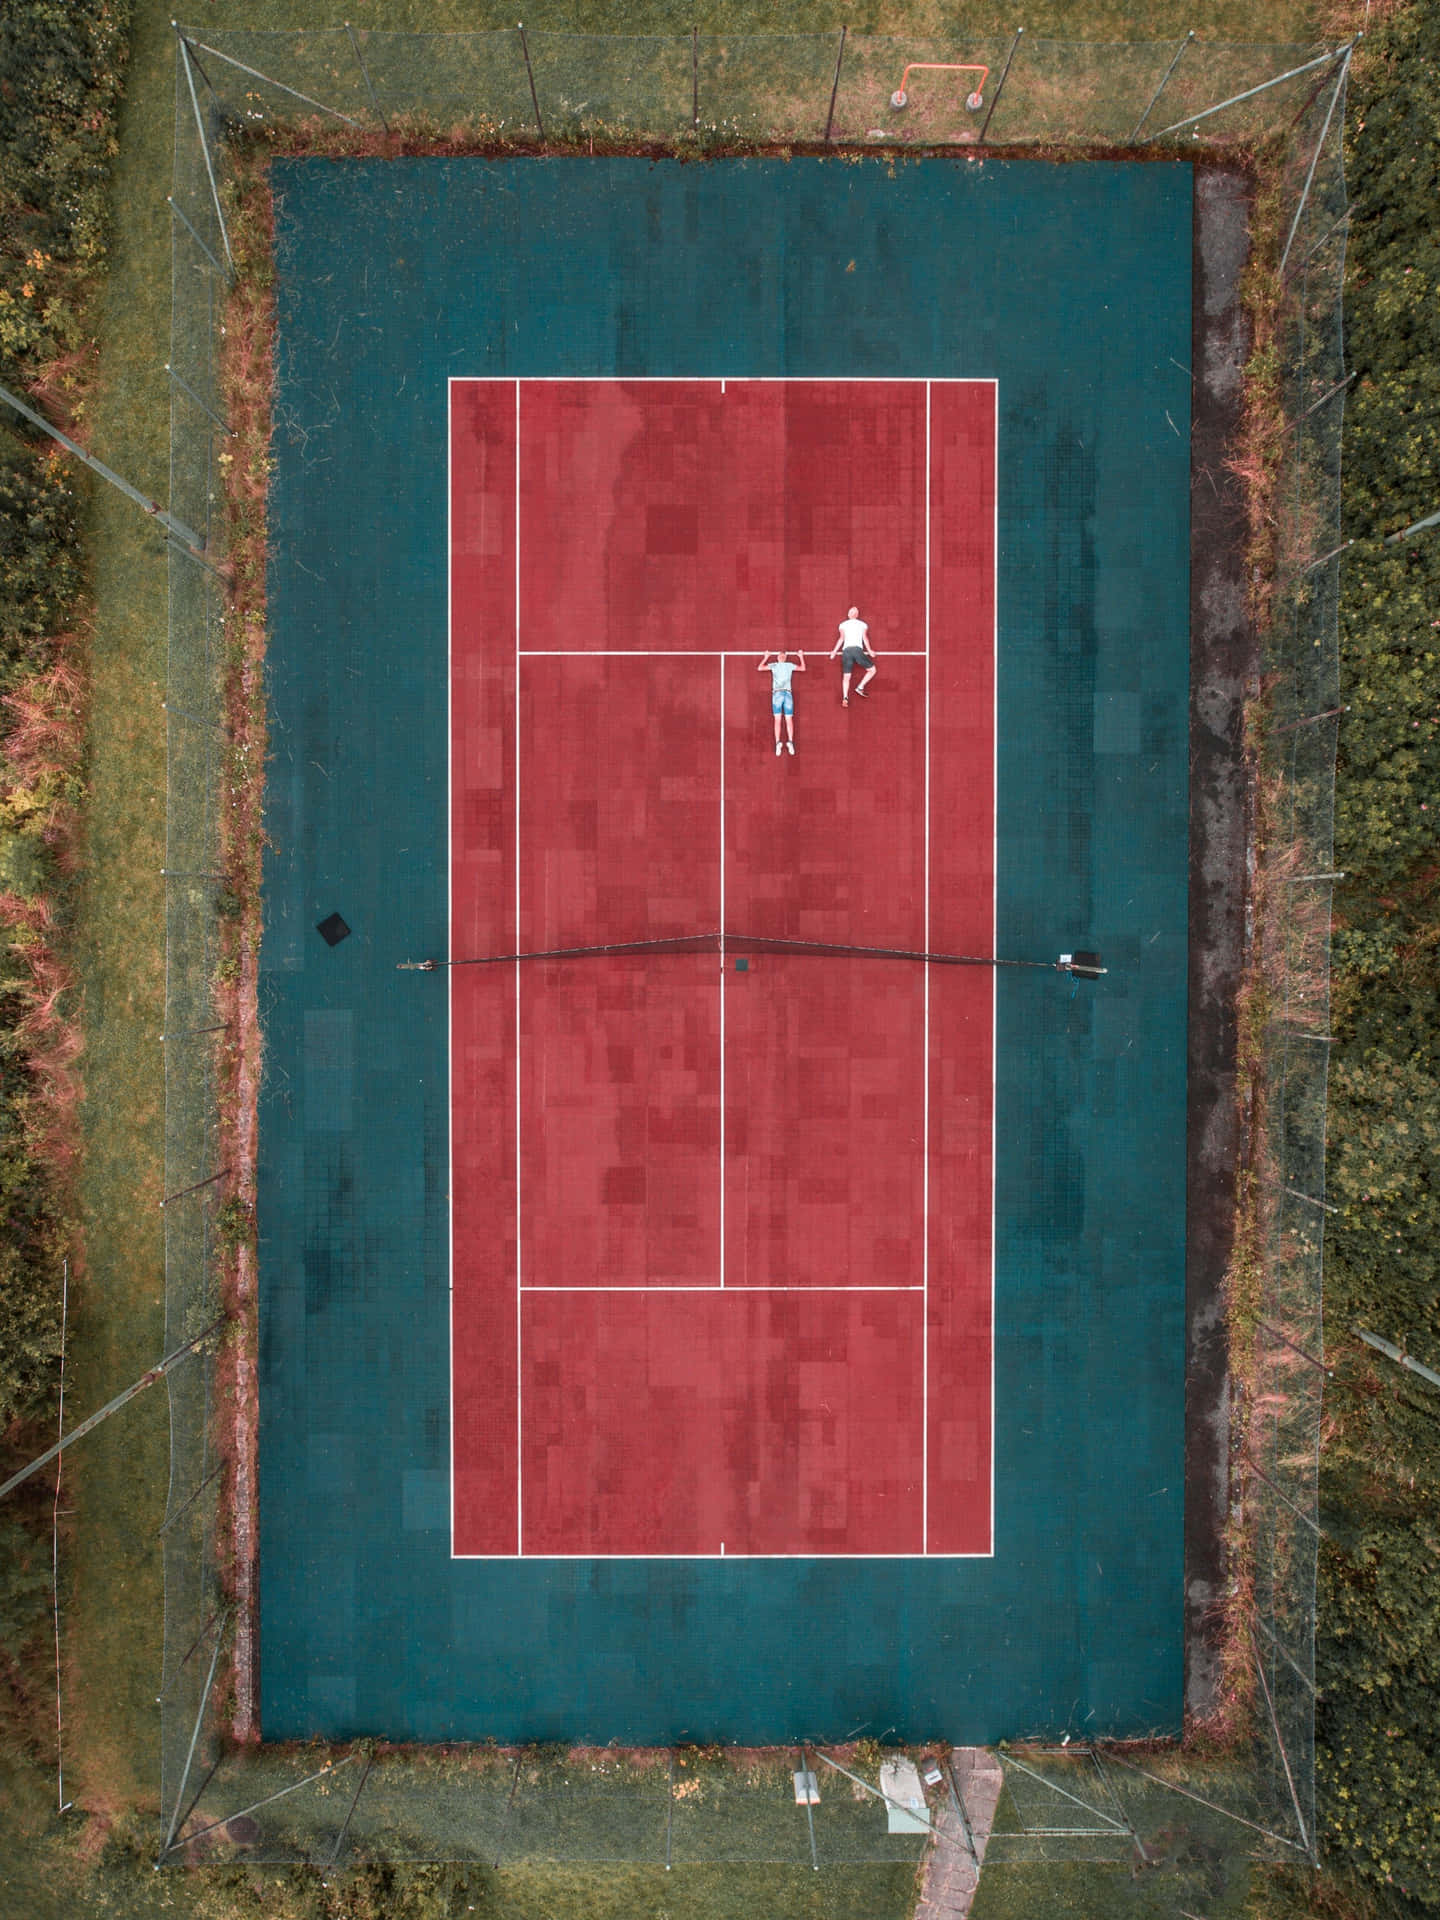 Vistaaérea De Una Cancha De Tenis